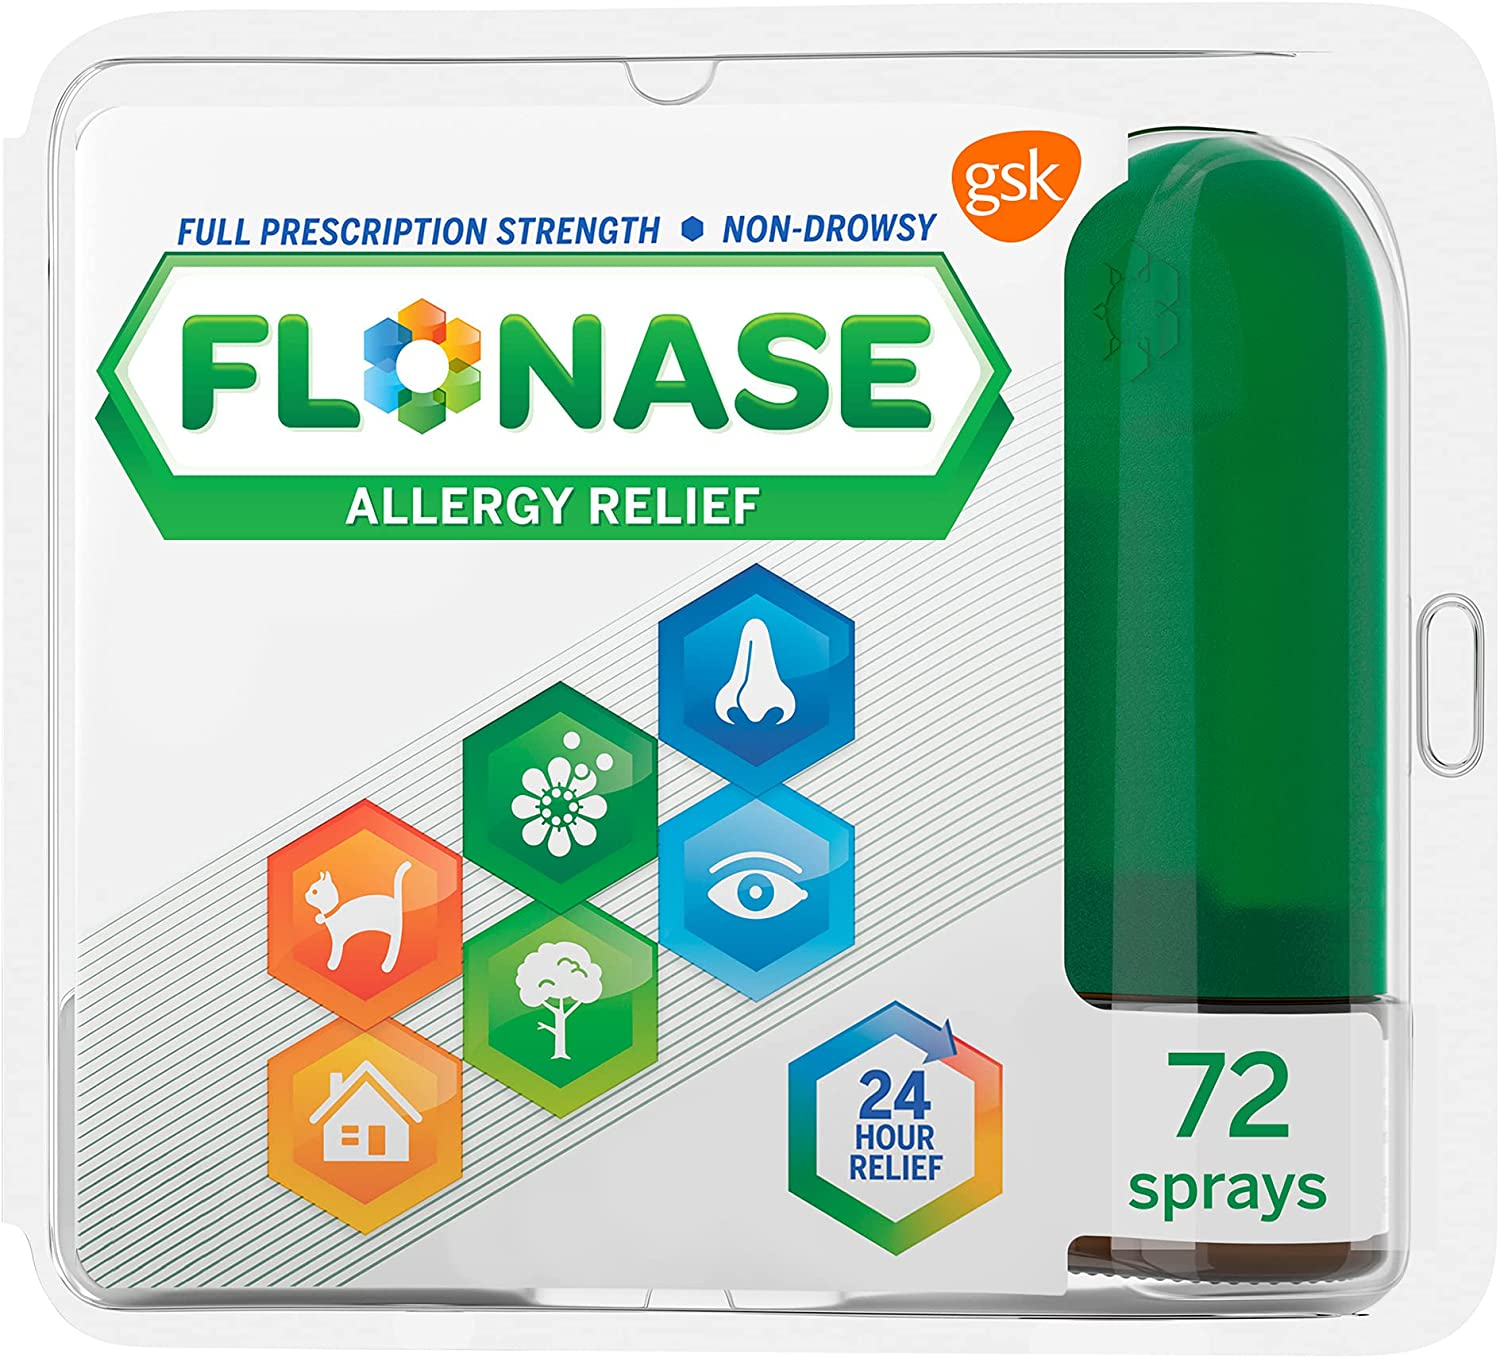 Amazon.com: Flonase Allergy Relief Nasal Spray, 24 Hour Non Drowsy Allergy Medicine, Metered Nasal Spray - 72 Sprays: Health & Personal Care $10.99